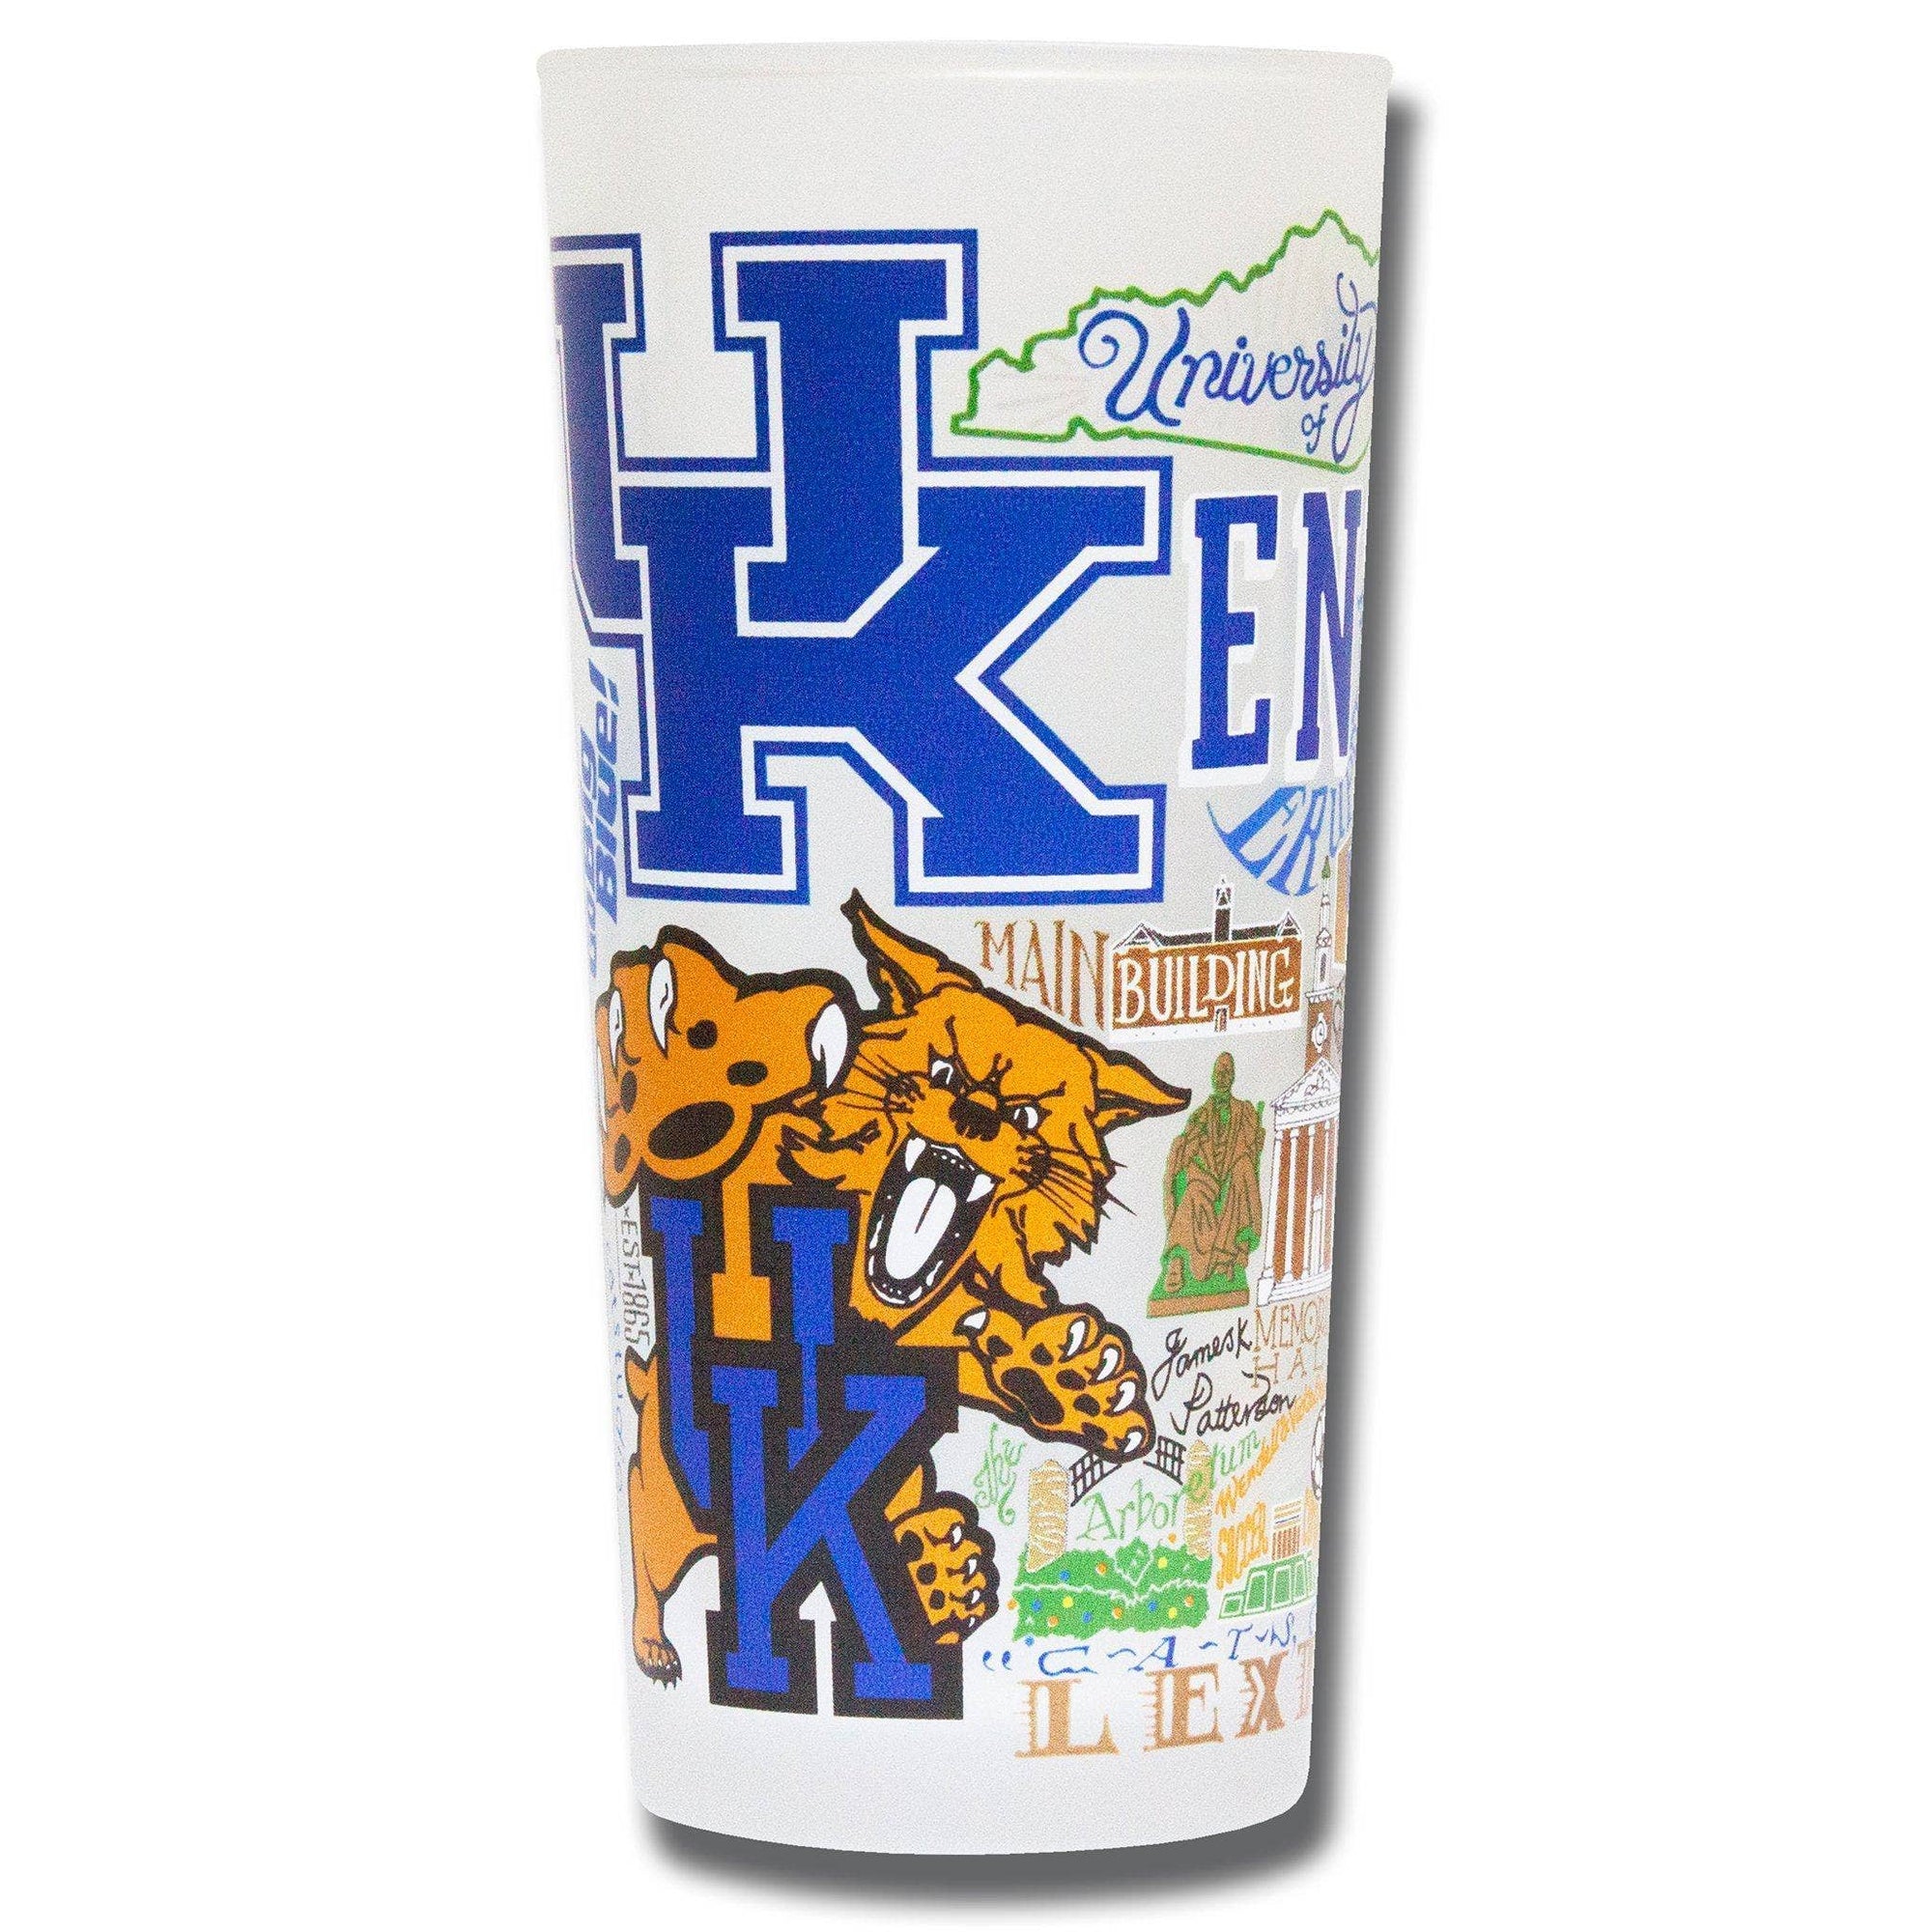 University of Kentucky Drinking Glass